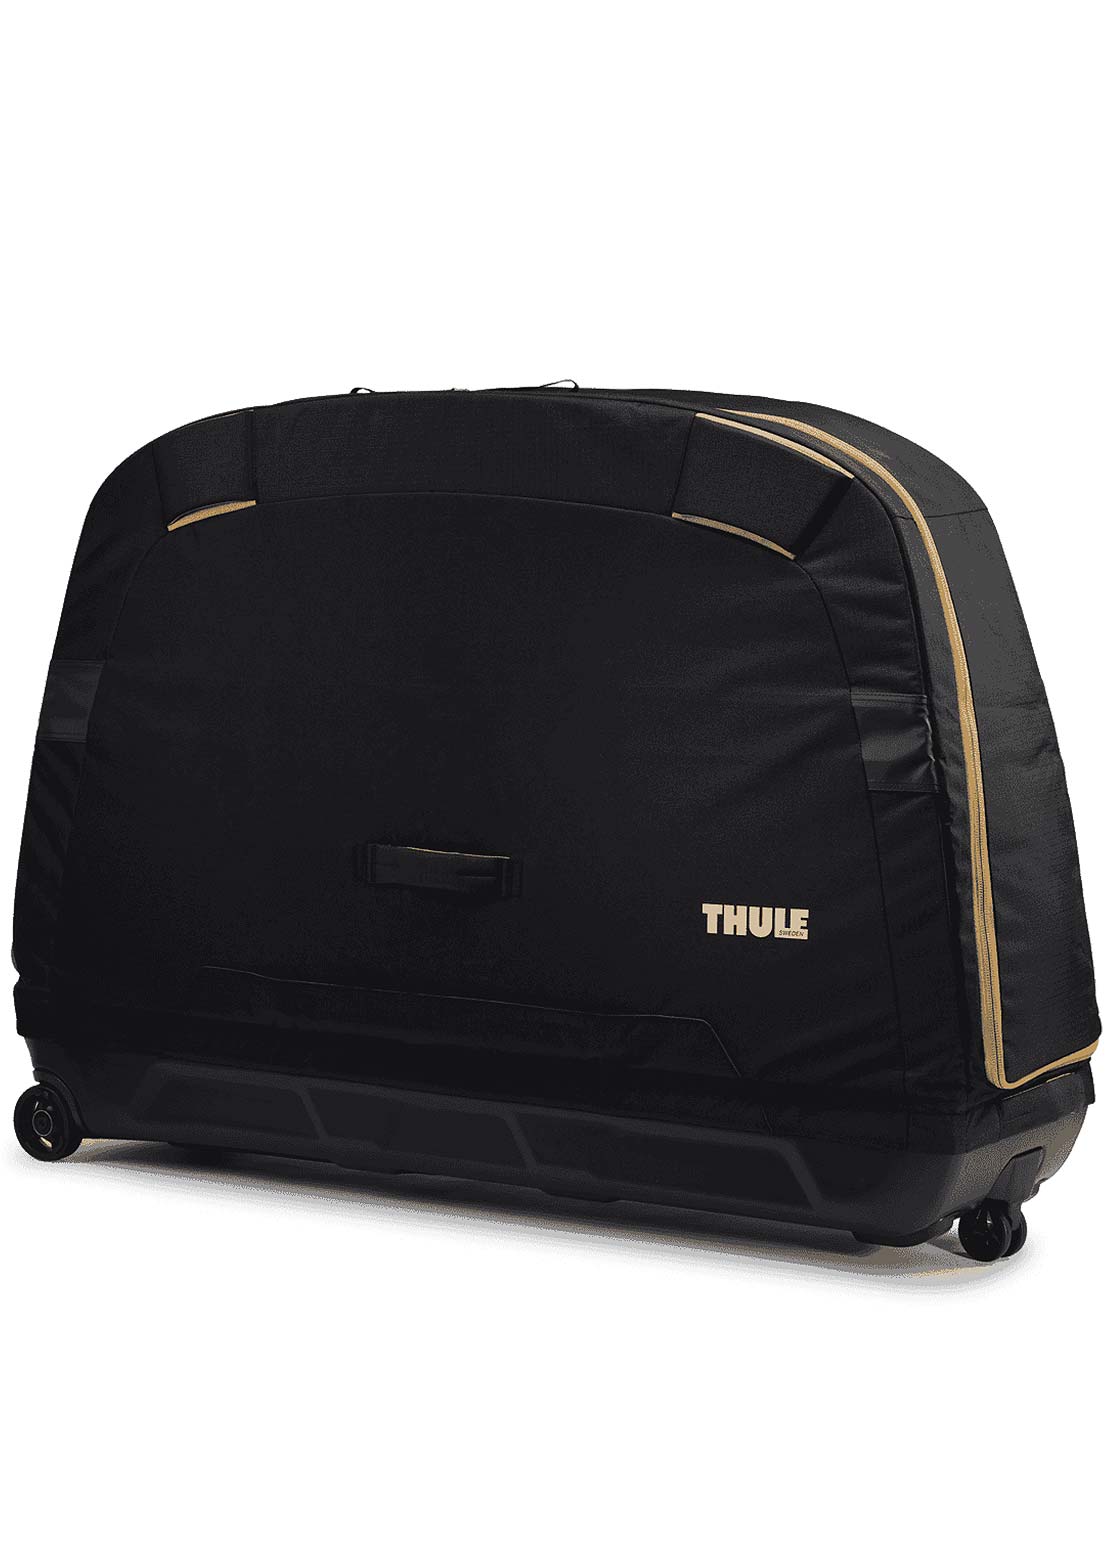 Thule Roundtrip Road Bike Travel Luggage Black